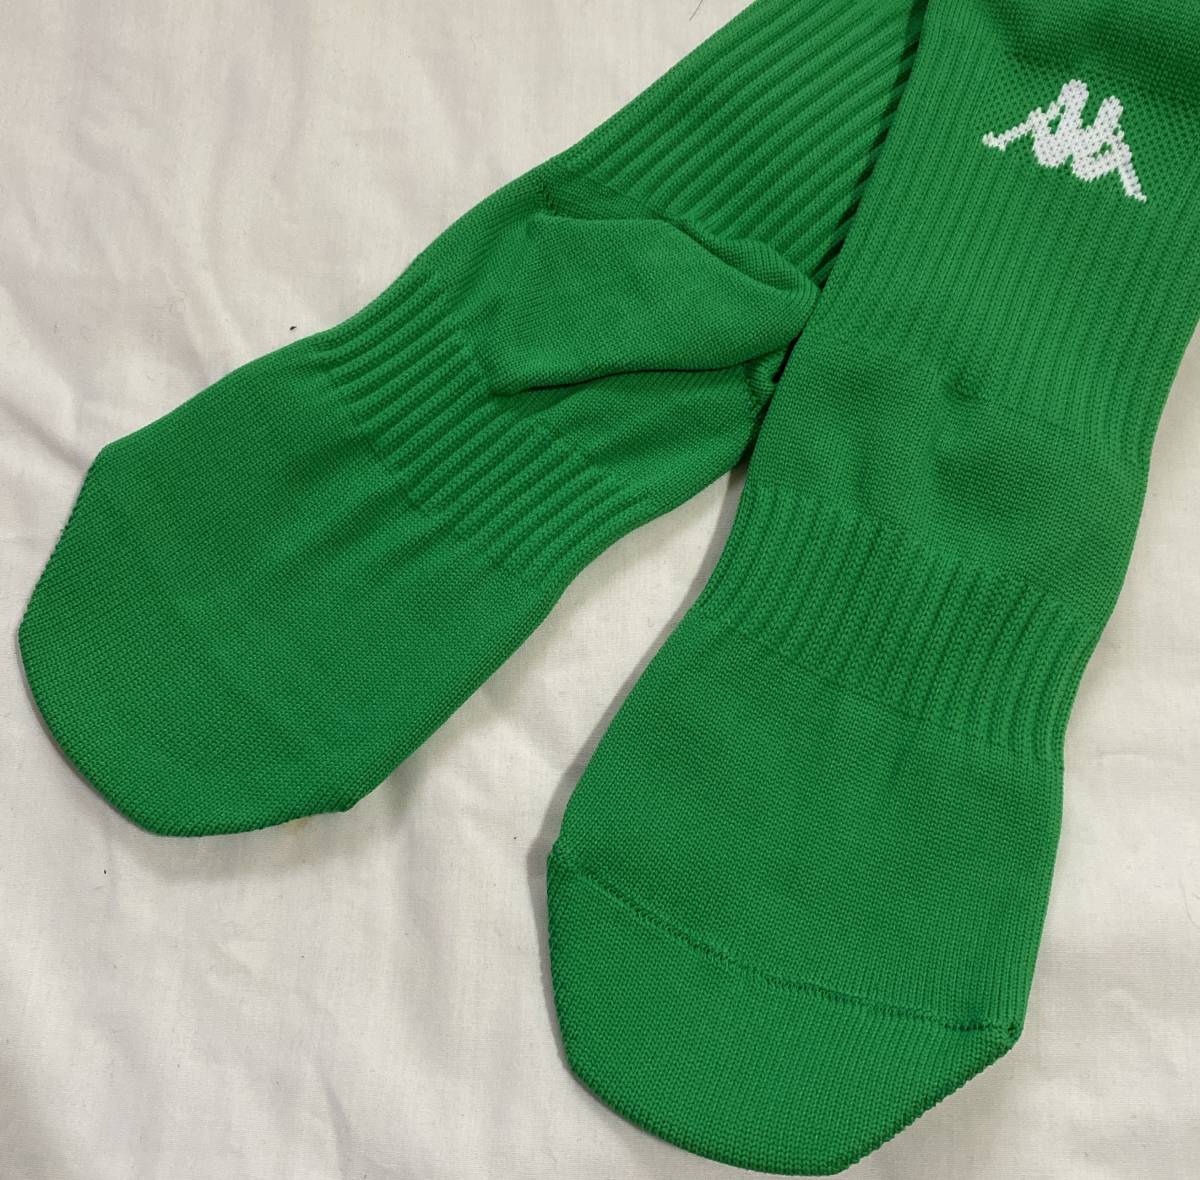  soccer socks 6 pair 19~21cm Kappa Kappa Junior for children green group stockings 6 pair 9.900 jpy goods /6 pair set sale ^v made in Japan 